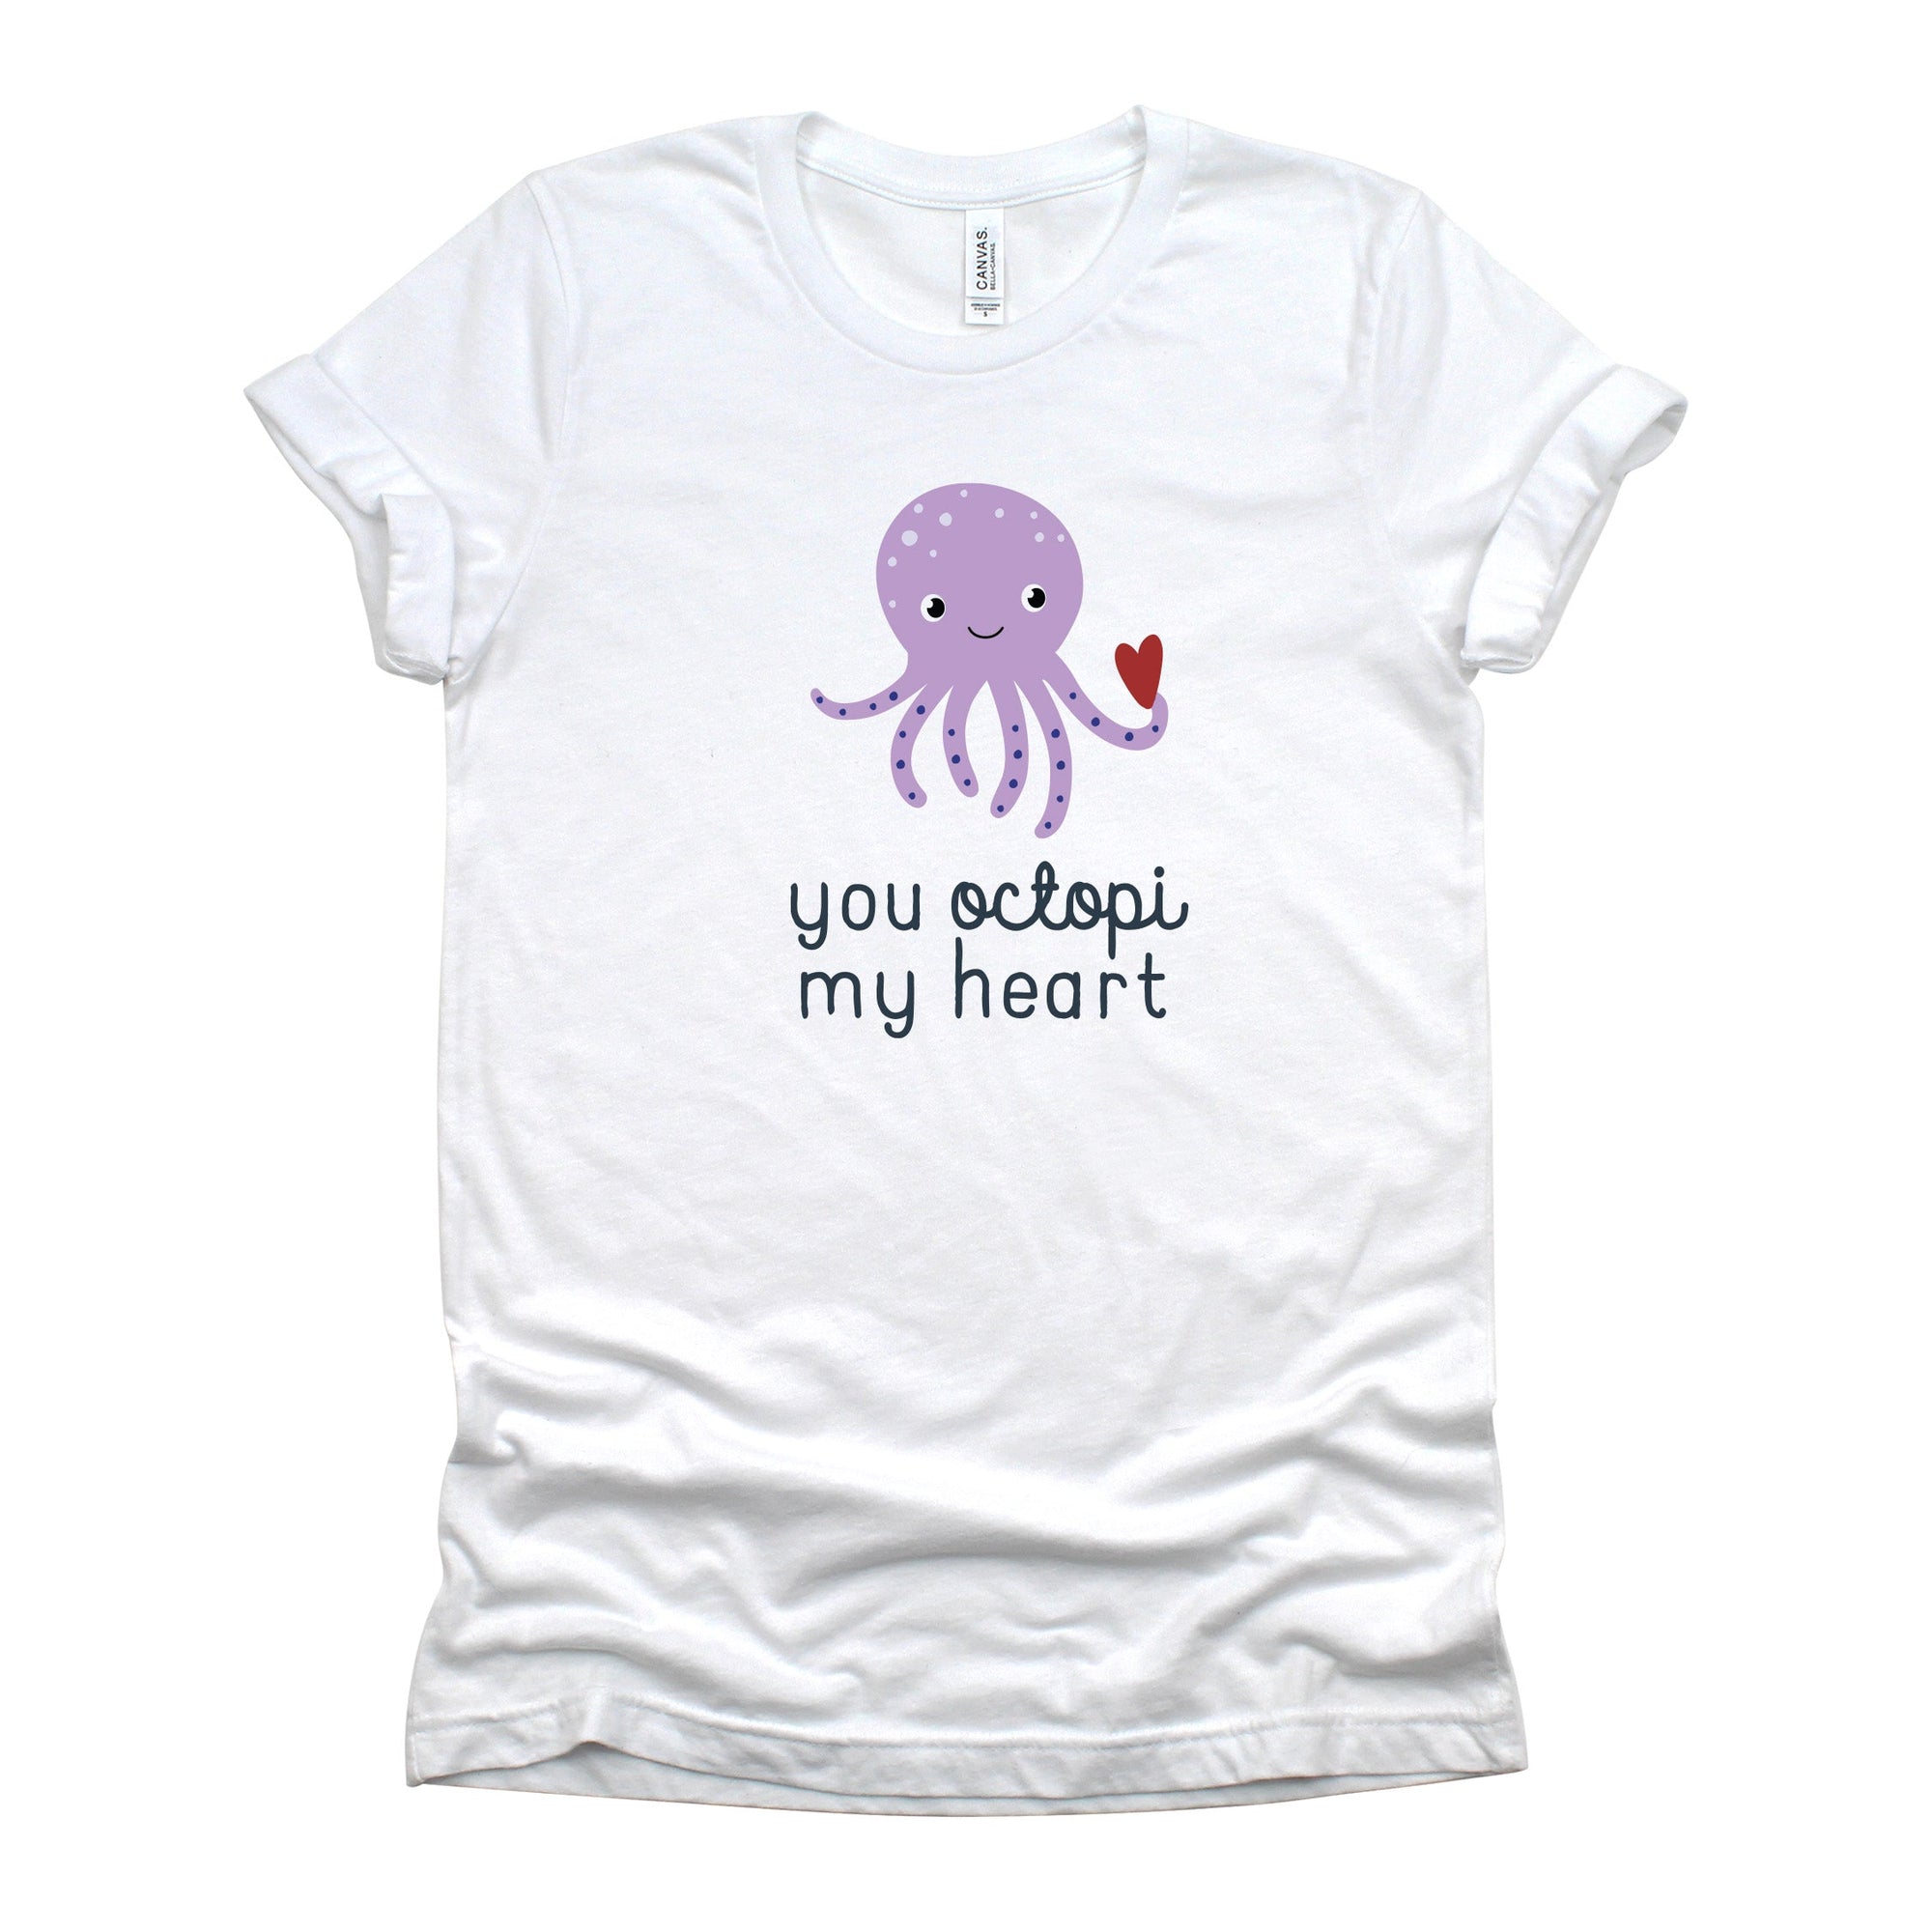 Cuddle Sleep Dream Adult Tees You Octopi My Heart | Adult Valentine Tshirt